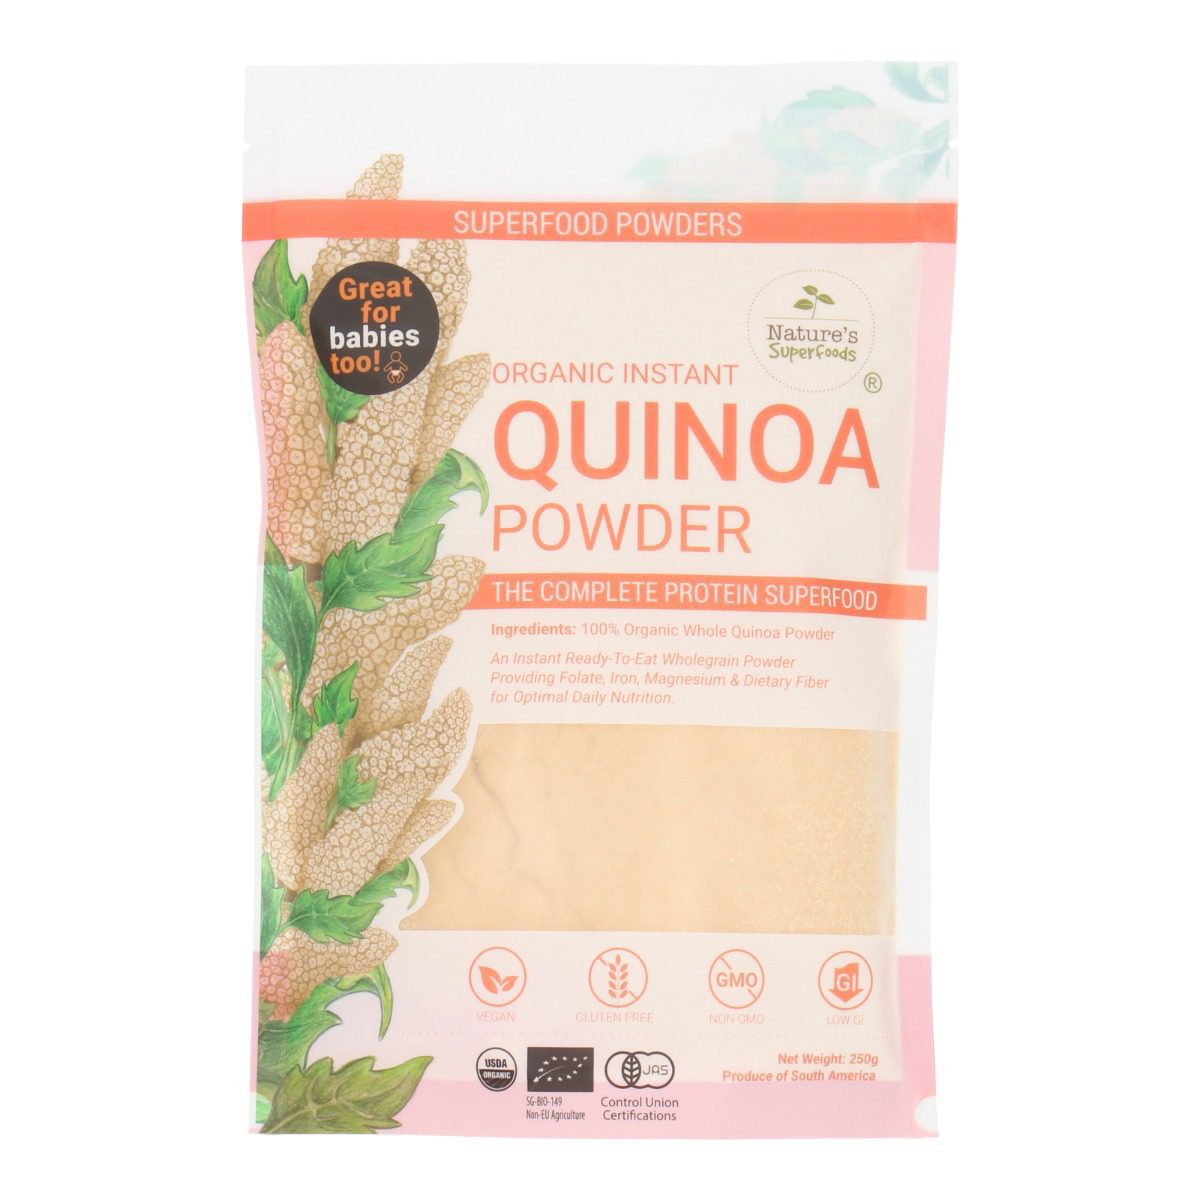 Organic Instant Quinoa Powder-250g resealable pack